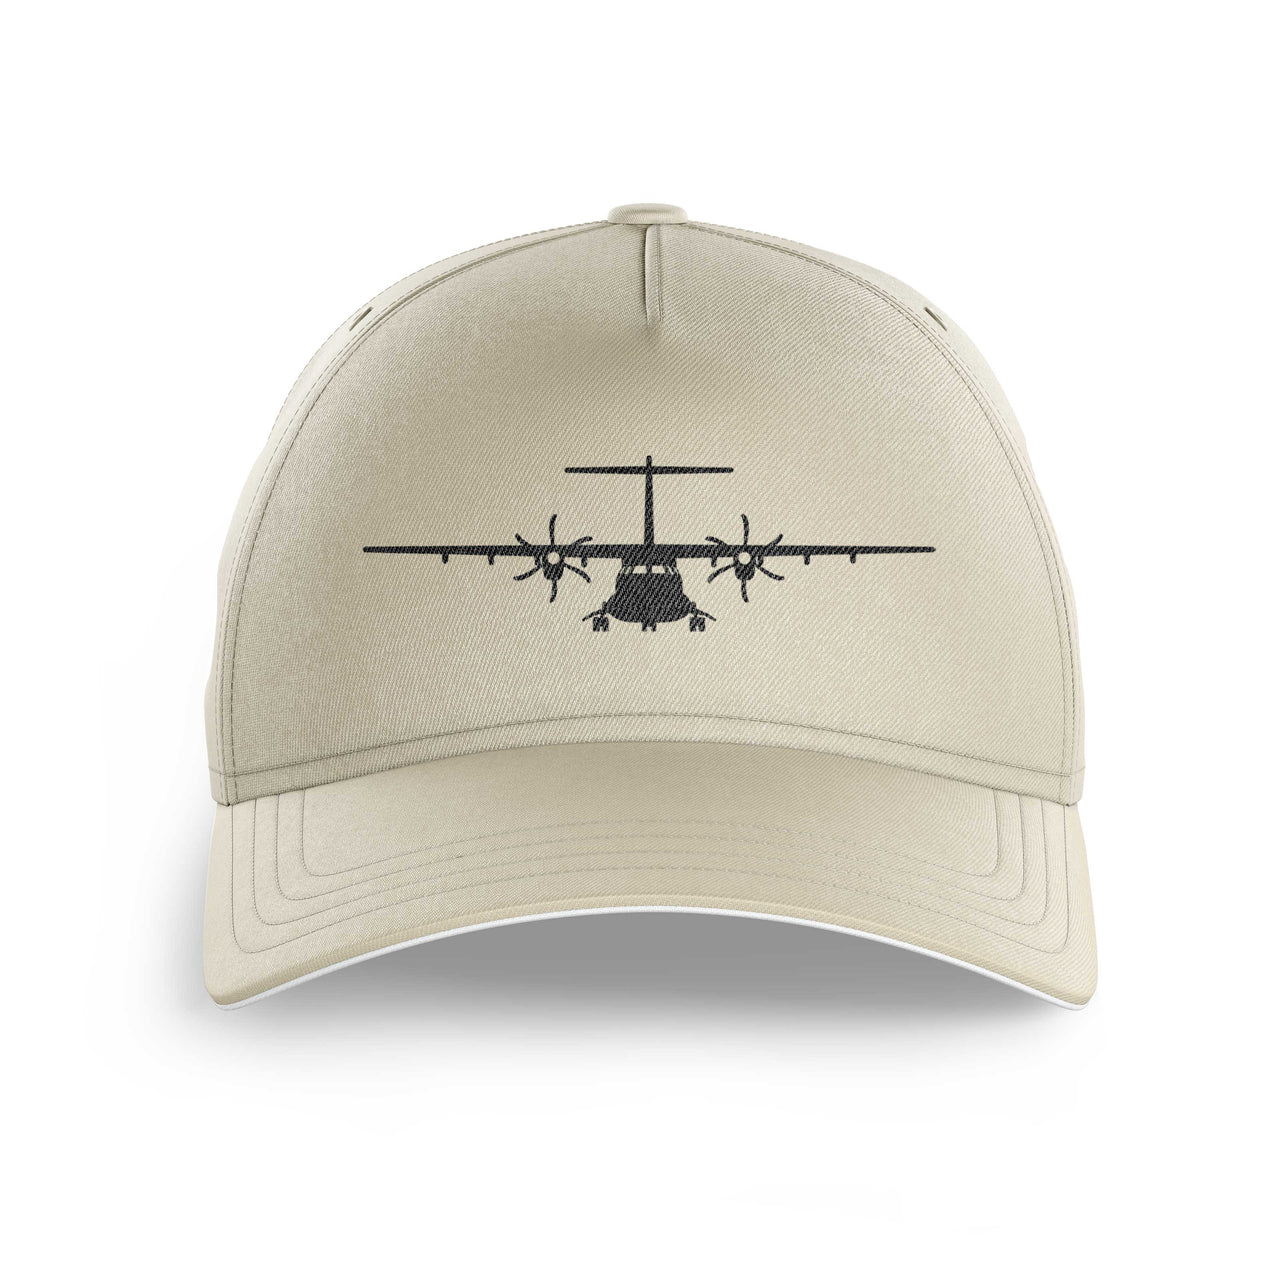 ATR-72 Silhouette Printed Hats